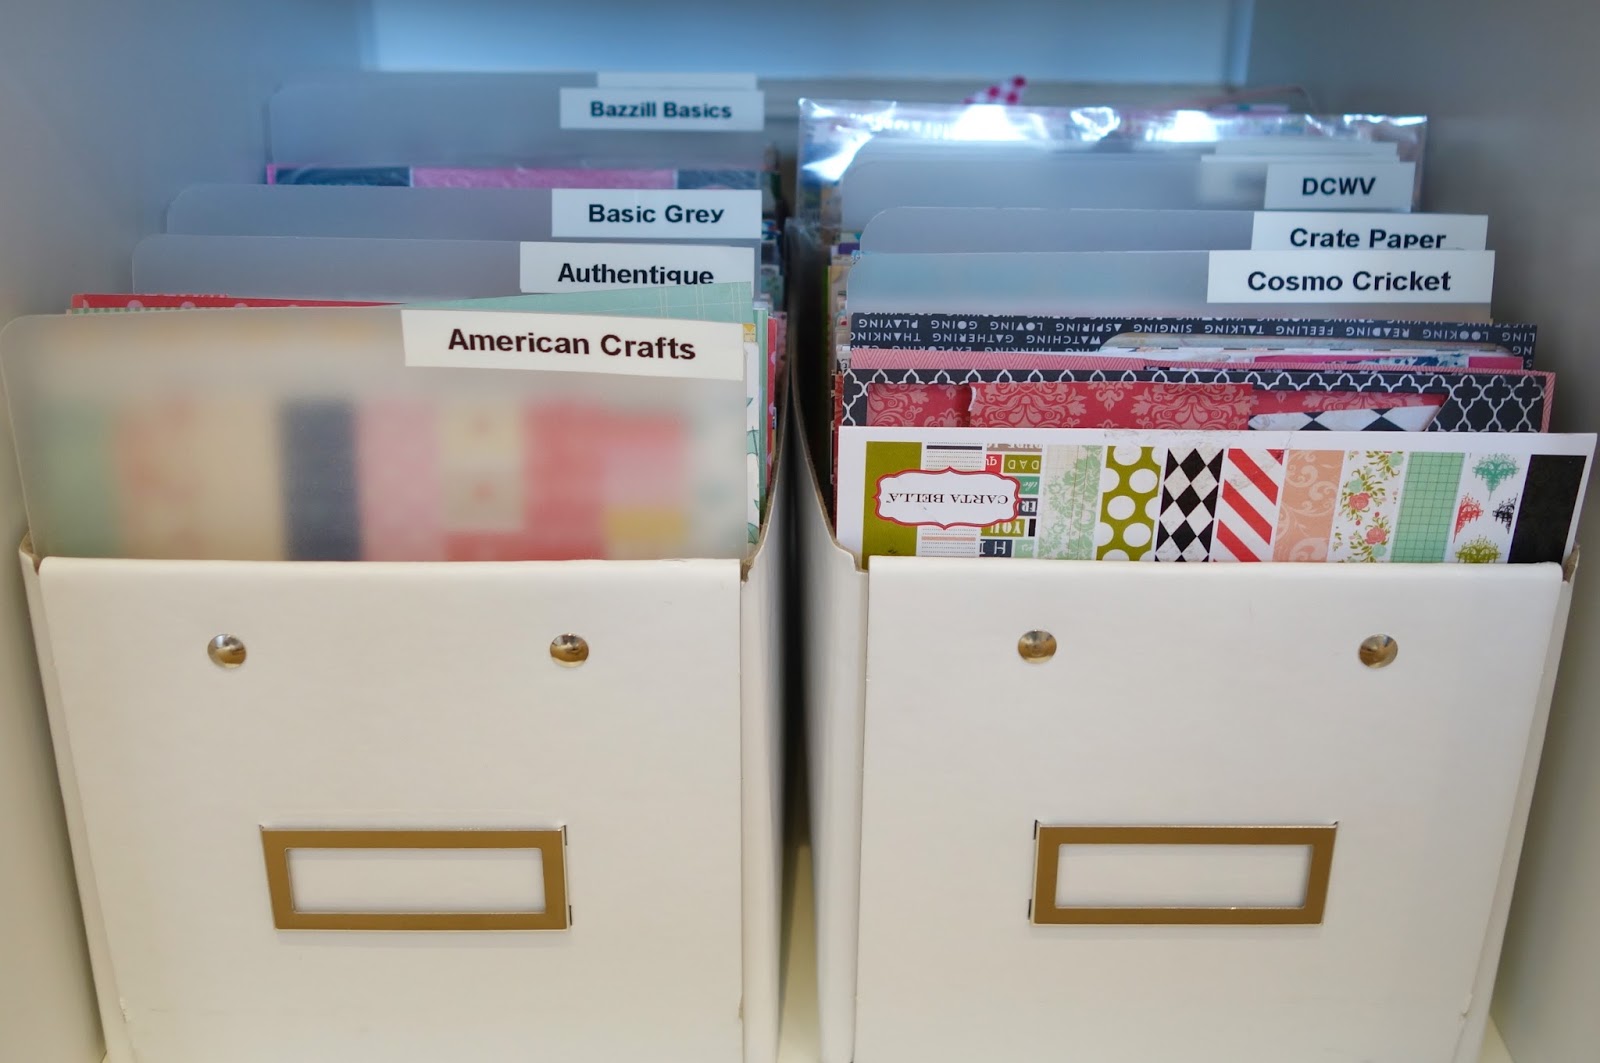  Craft Room Basics - 6x6 Paper Storage - 6 Shelf